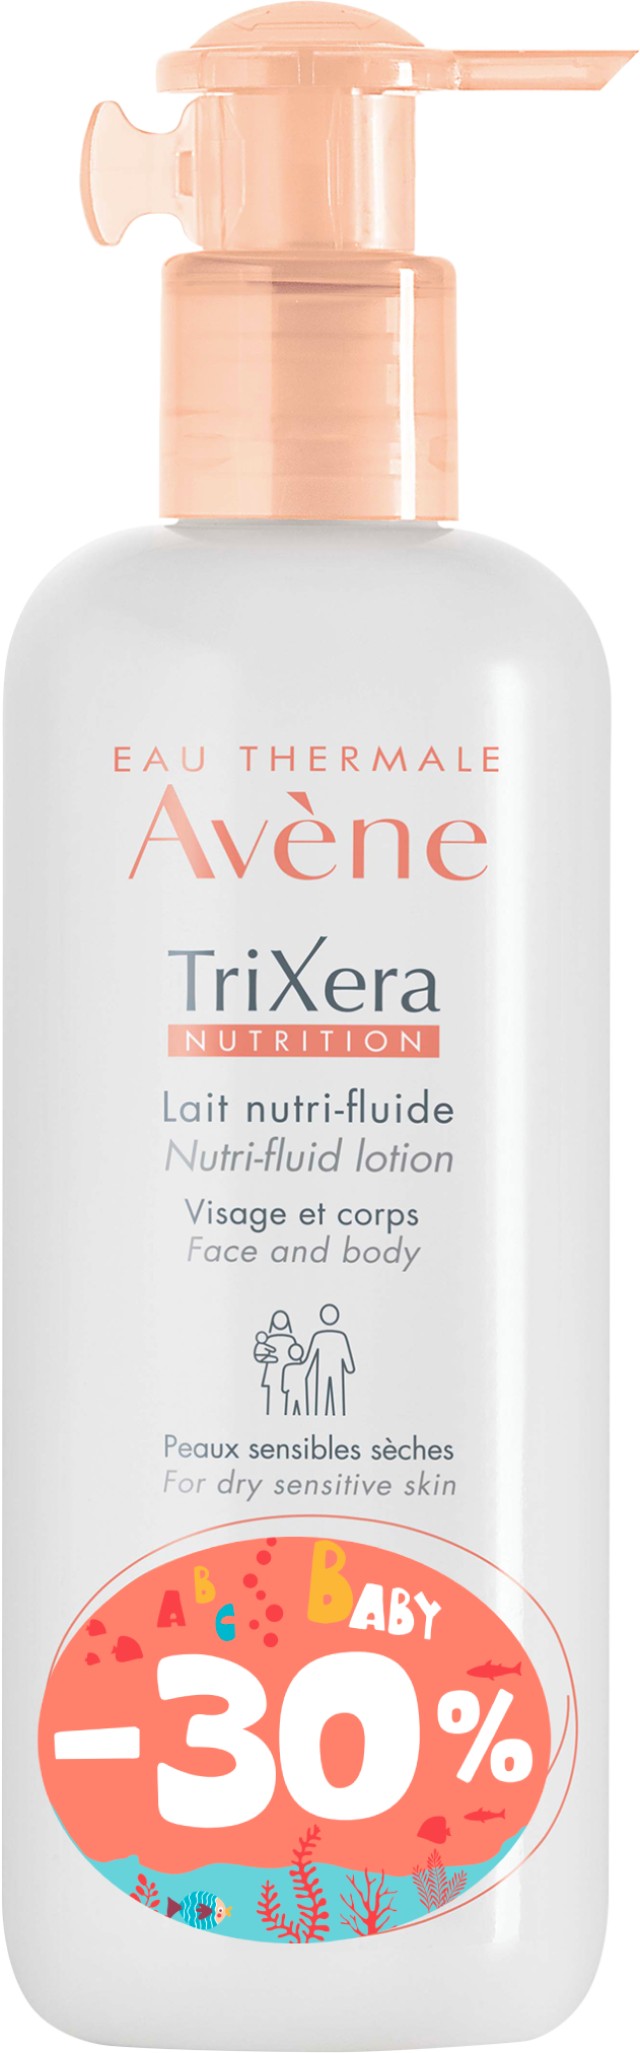 Avène TriXera Nutrition Λεπτόρρευστο Θρεπτικό Γαλάκτωμα Προσώπου - Σώματος για Ξηρό / Πολύ Ξηρό Δέρμα 400ml -30% Επί Της Λιανικής